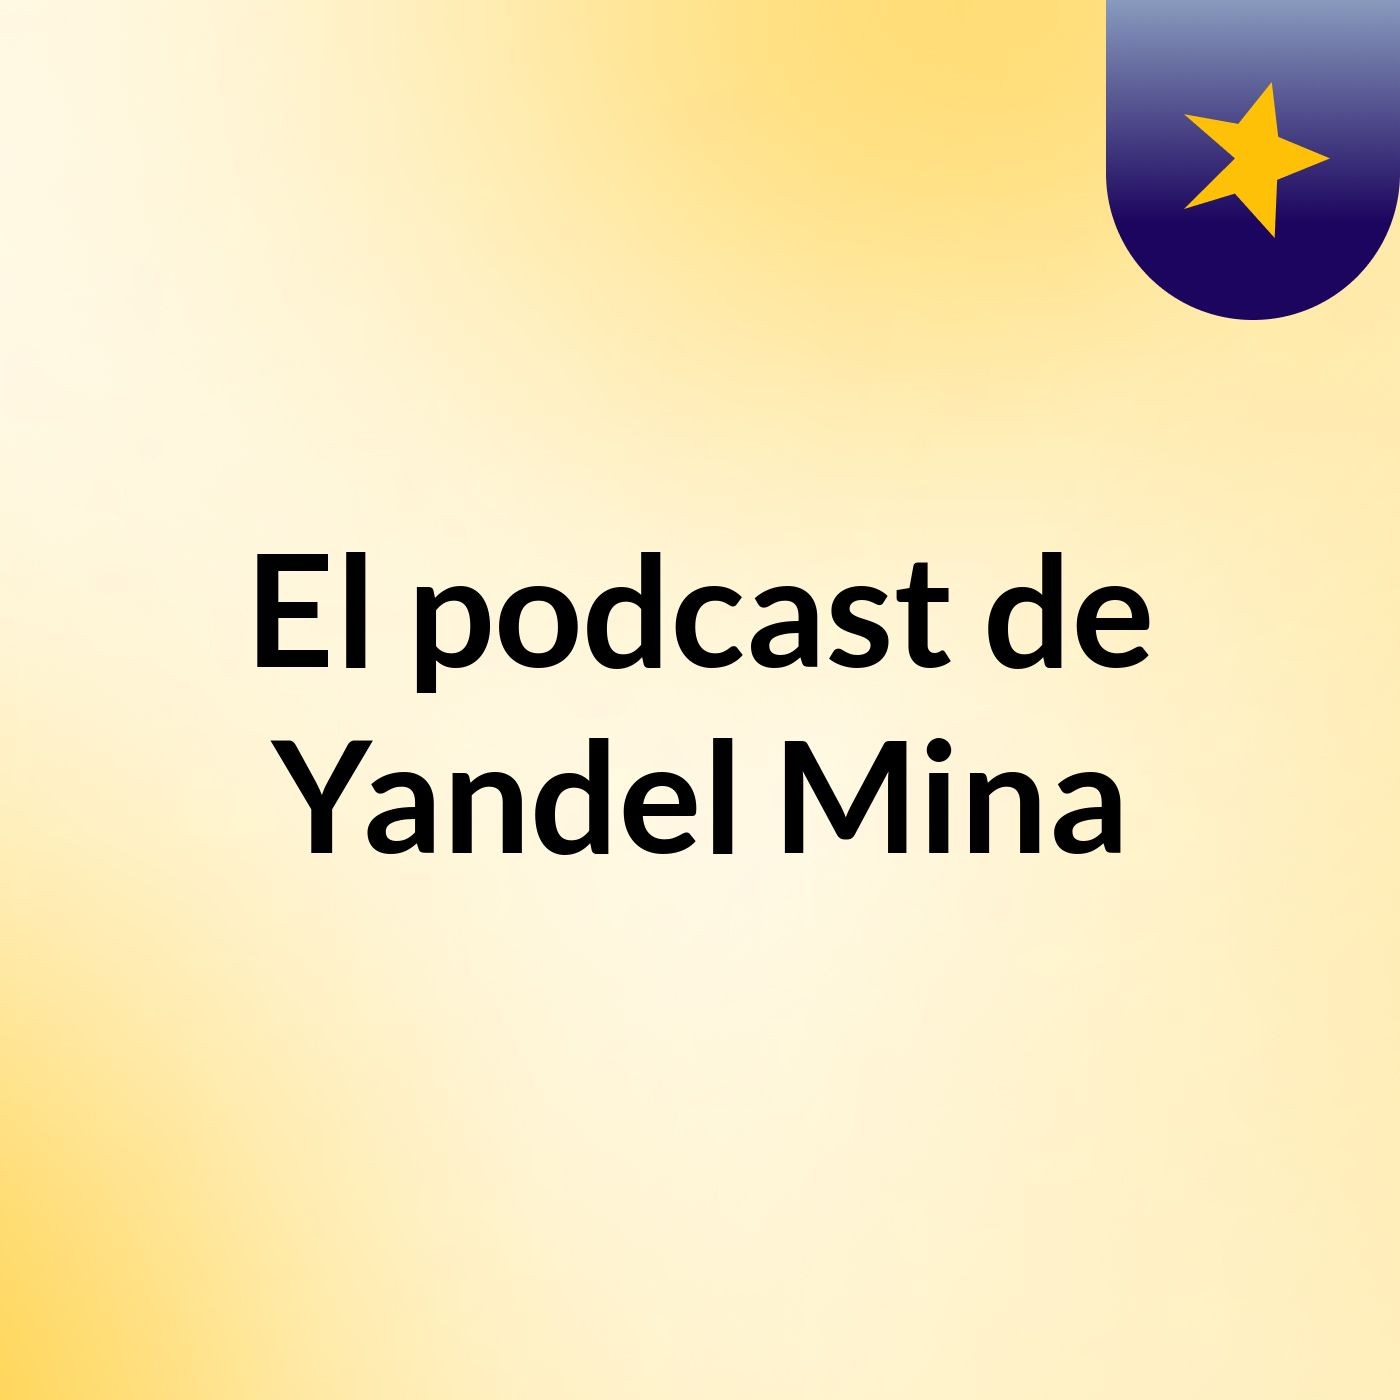 Episodio 2 - El podcast de Yandel Mina